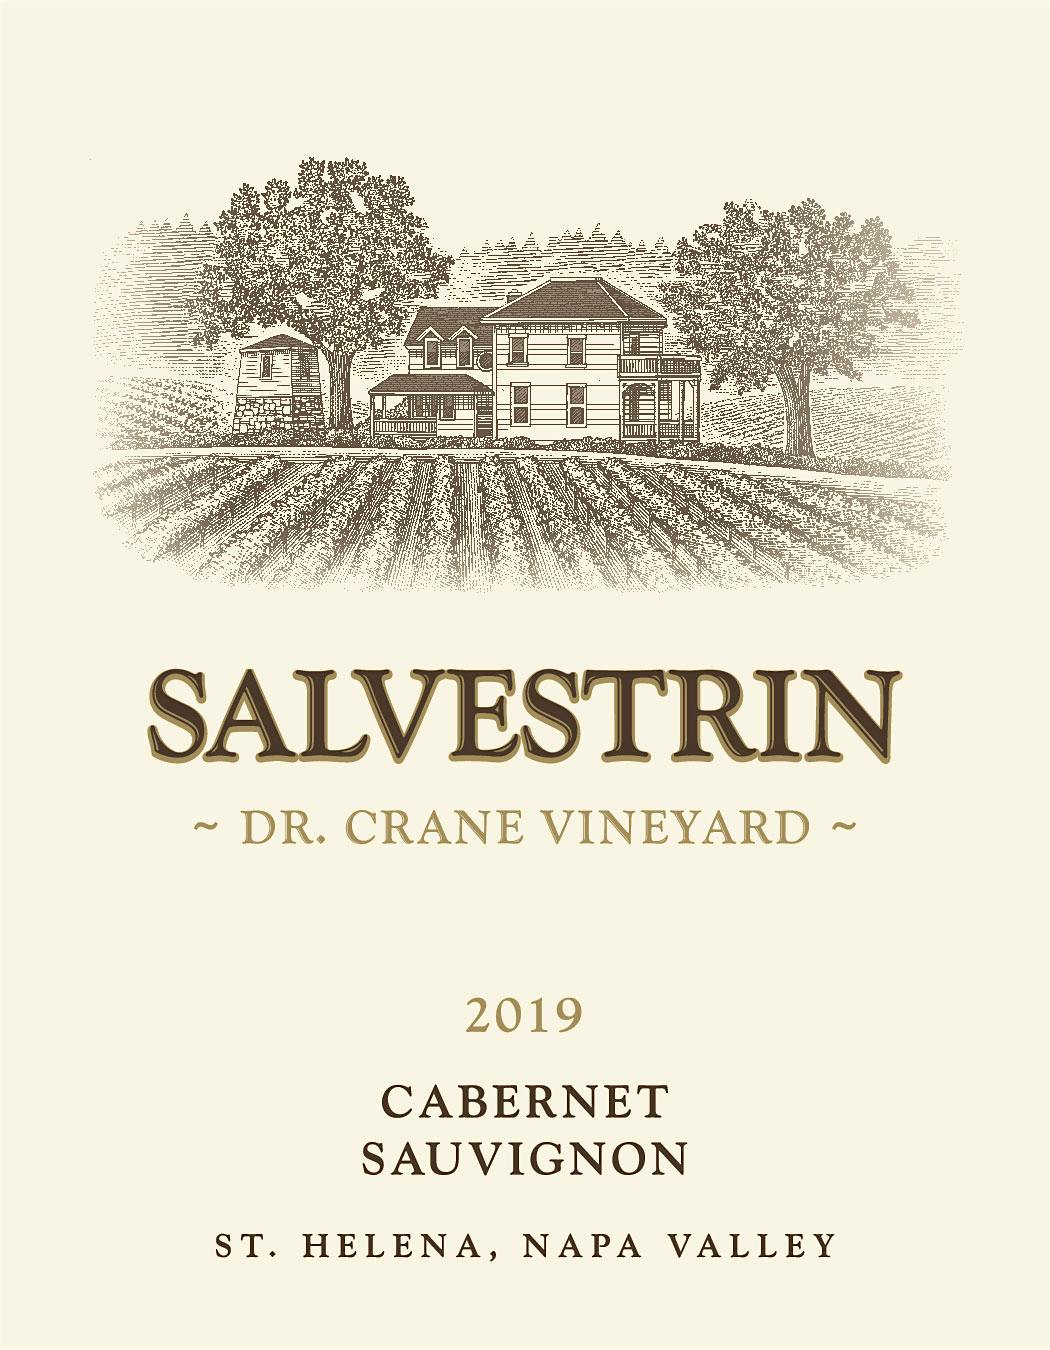 Label for Salvestrin